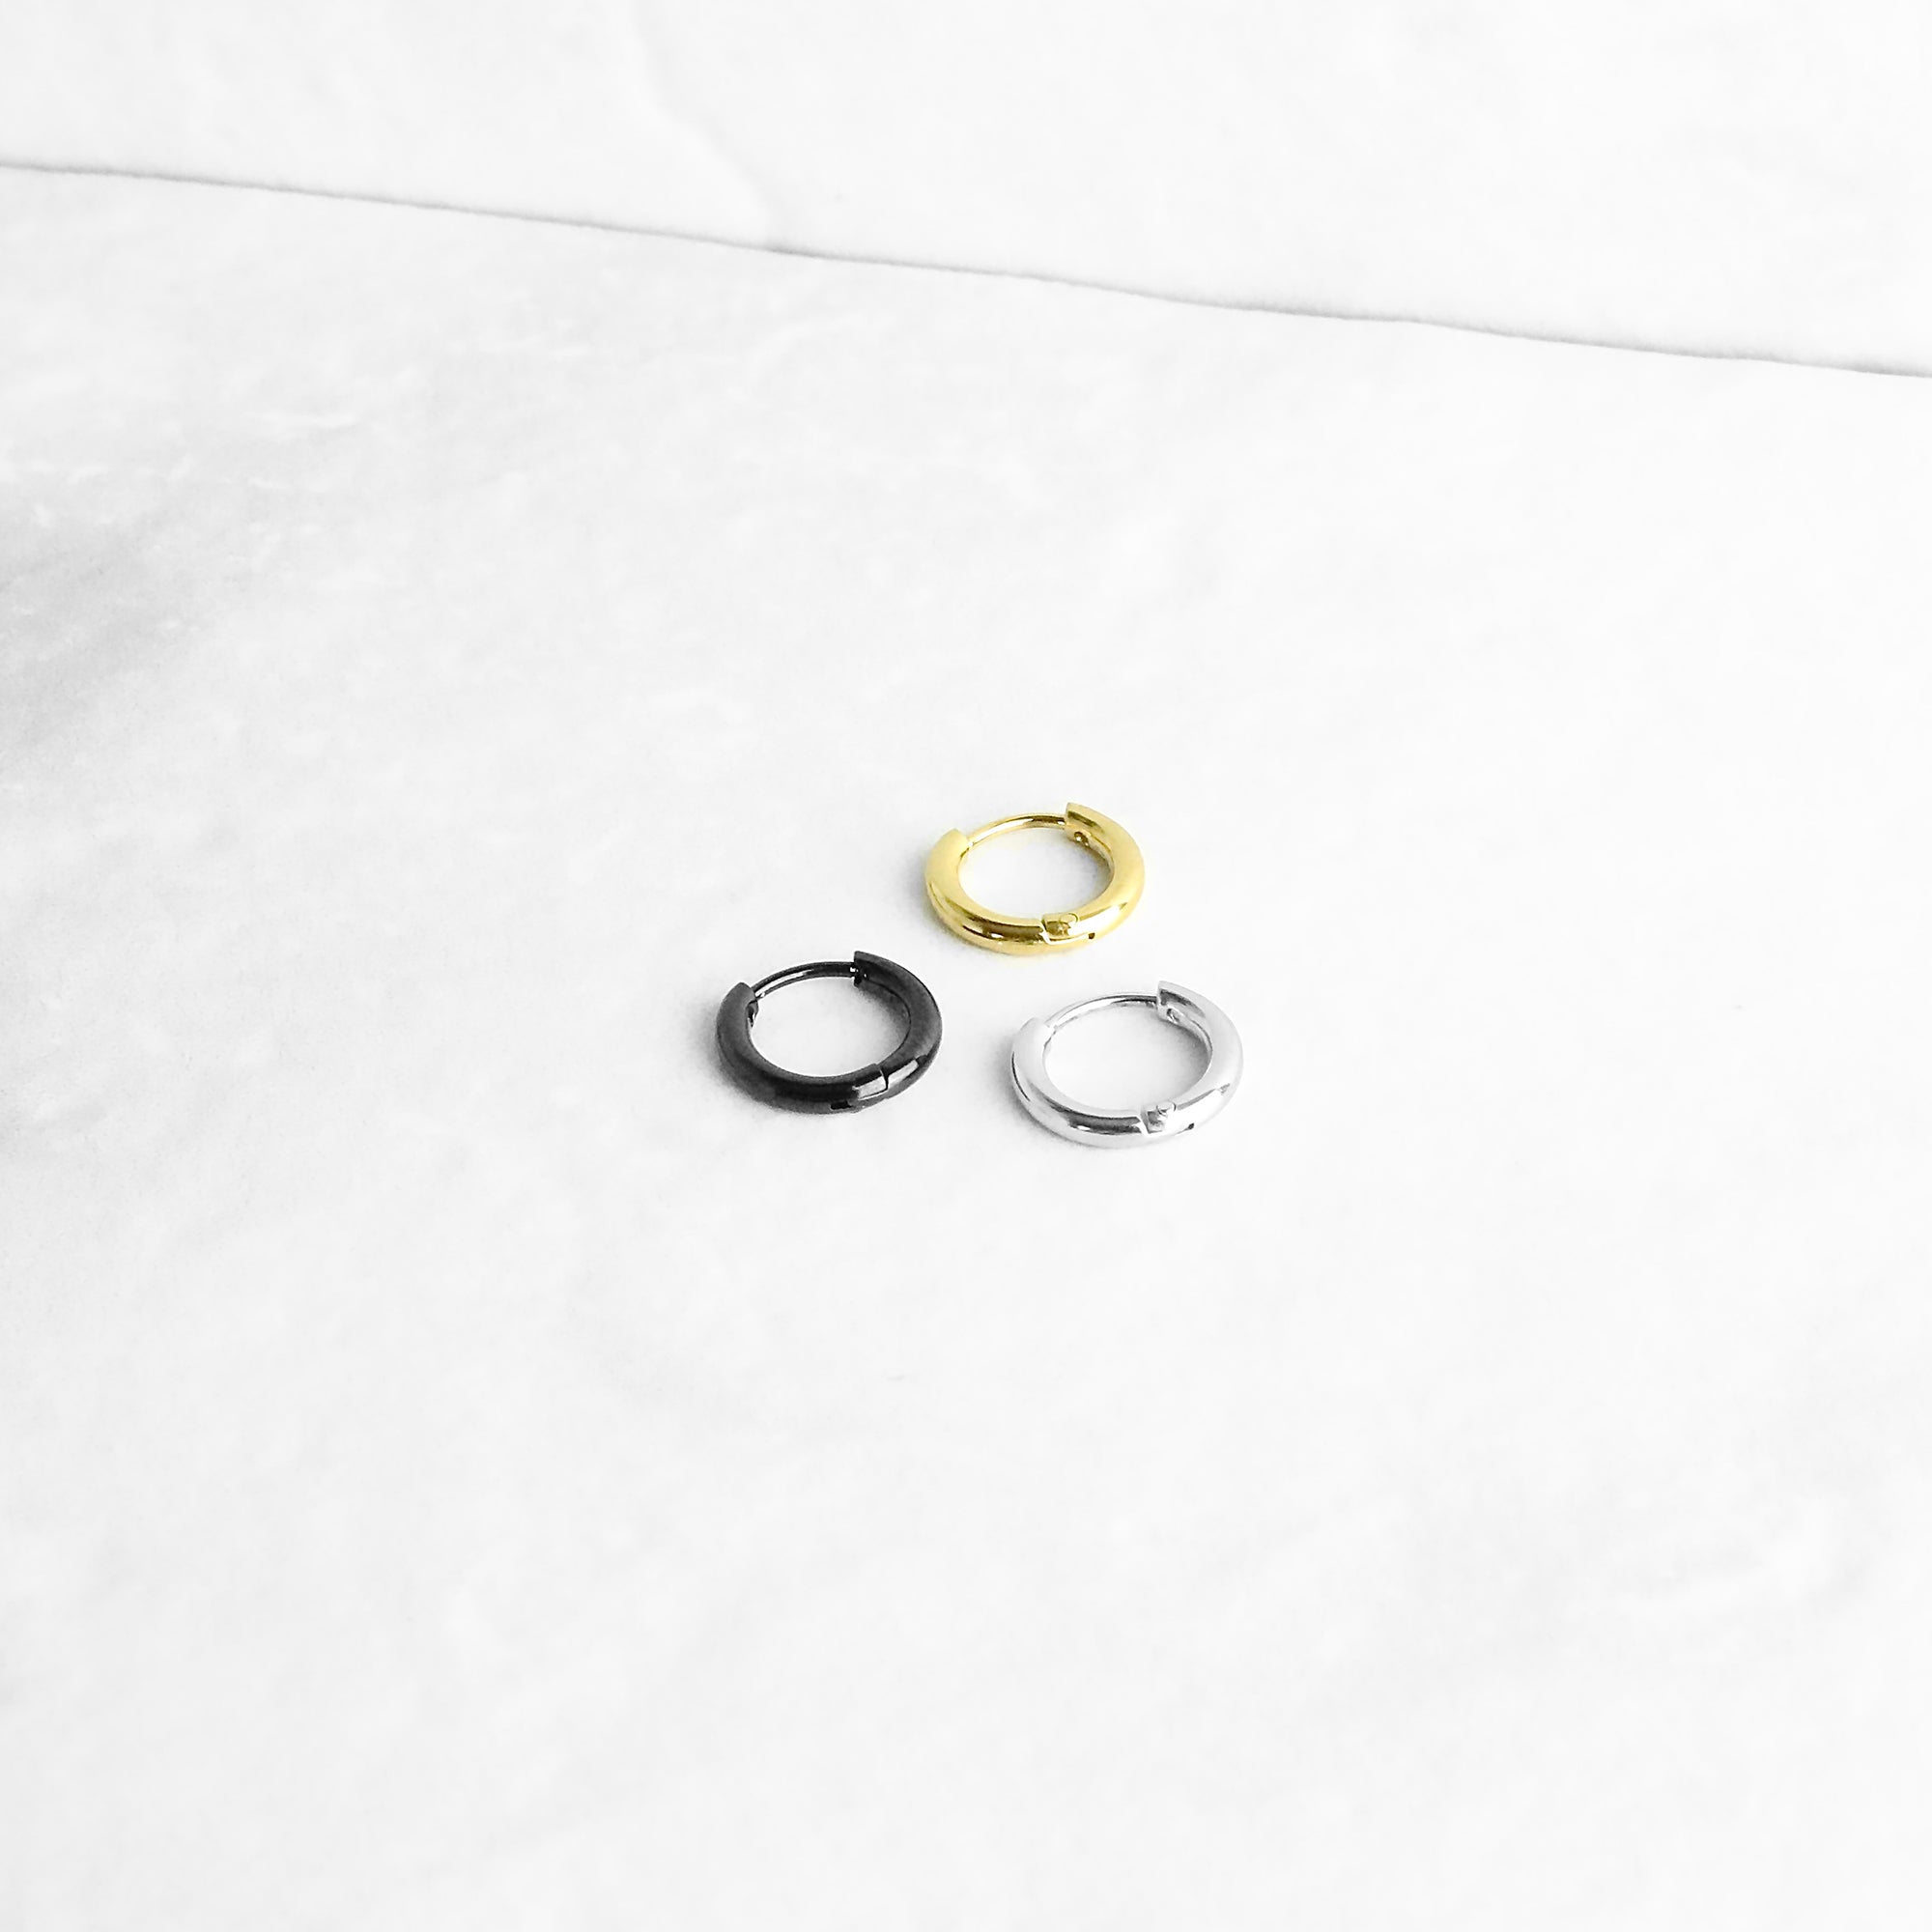 Balancing ACT No. 2_GR | Clear Earrings, Circle Earrings, Minimal Earrings, Mobile Earrings, Modern Jewelry, Sphere Earrings, Green 